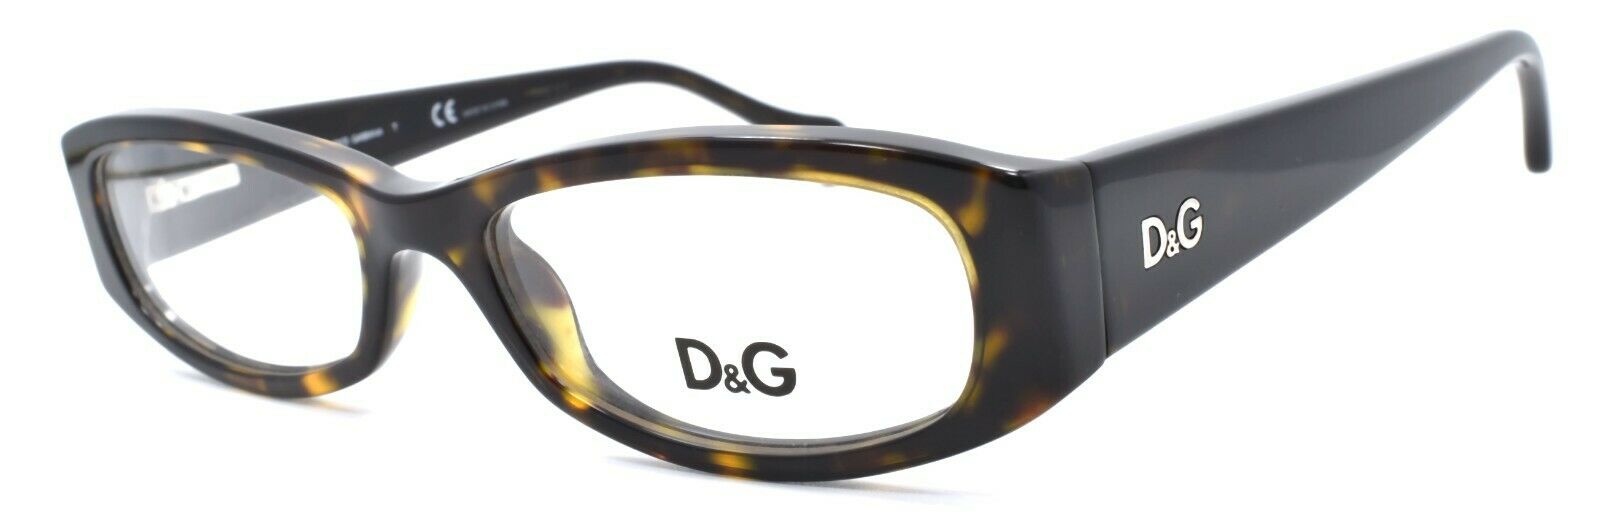 1-Dolce & Gabbana D&G 1228 502 Women's Eyeglasses Frames Petite 48-16-135 Havana-679420460963-IKSpecs